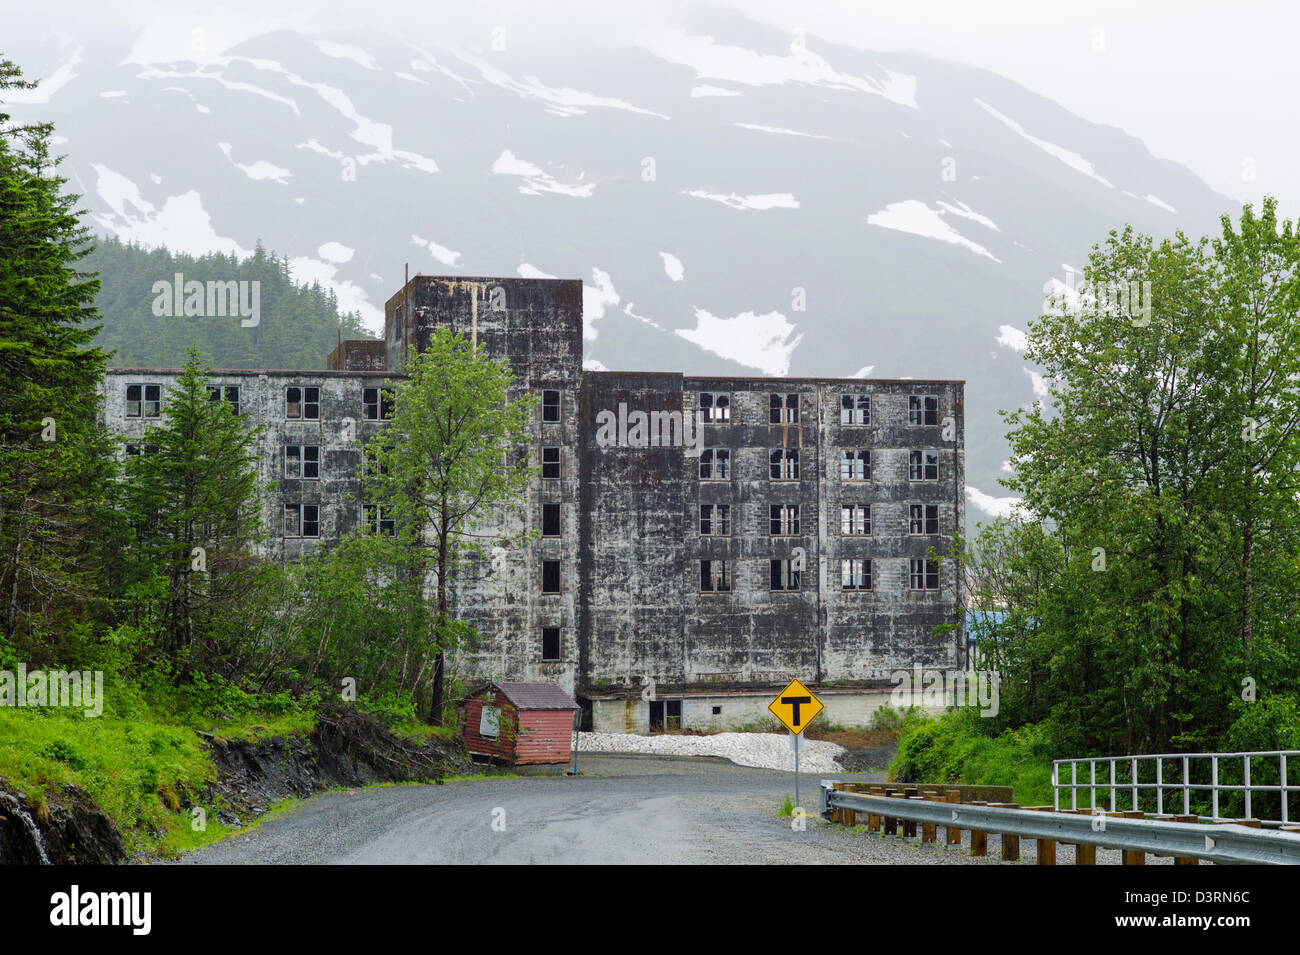 Historic Buckner Building, once the largest building in Alaska, Whittier, Alaska, USA.  Now abandoned, full of asbestos. Stock Photo